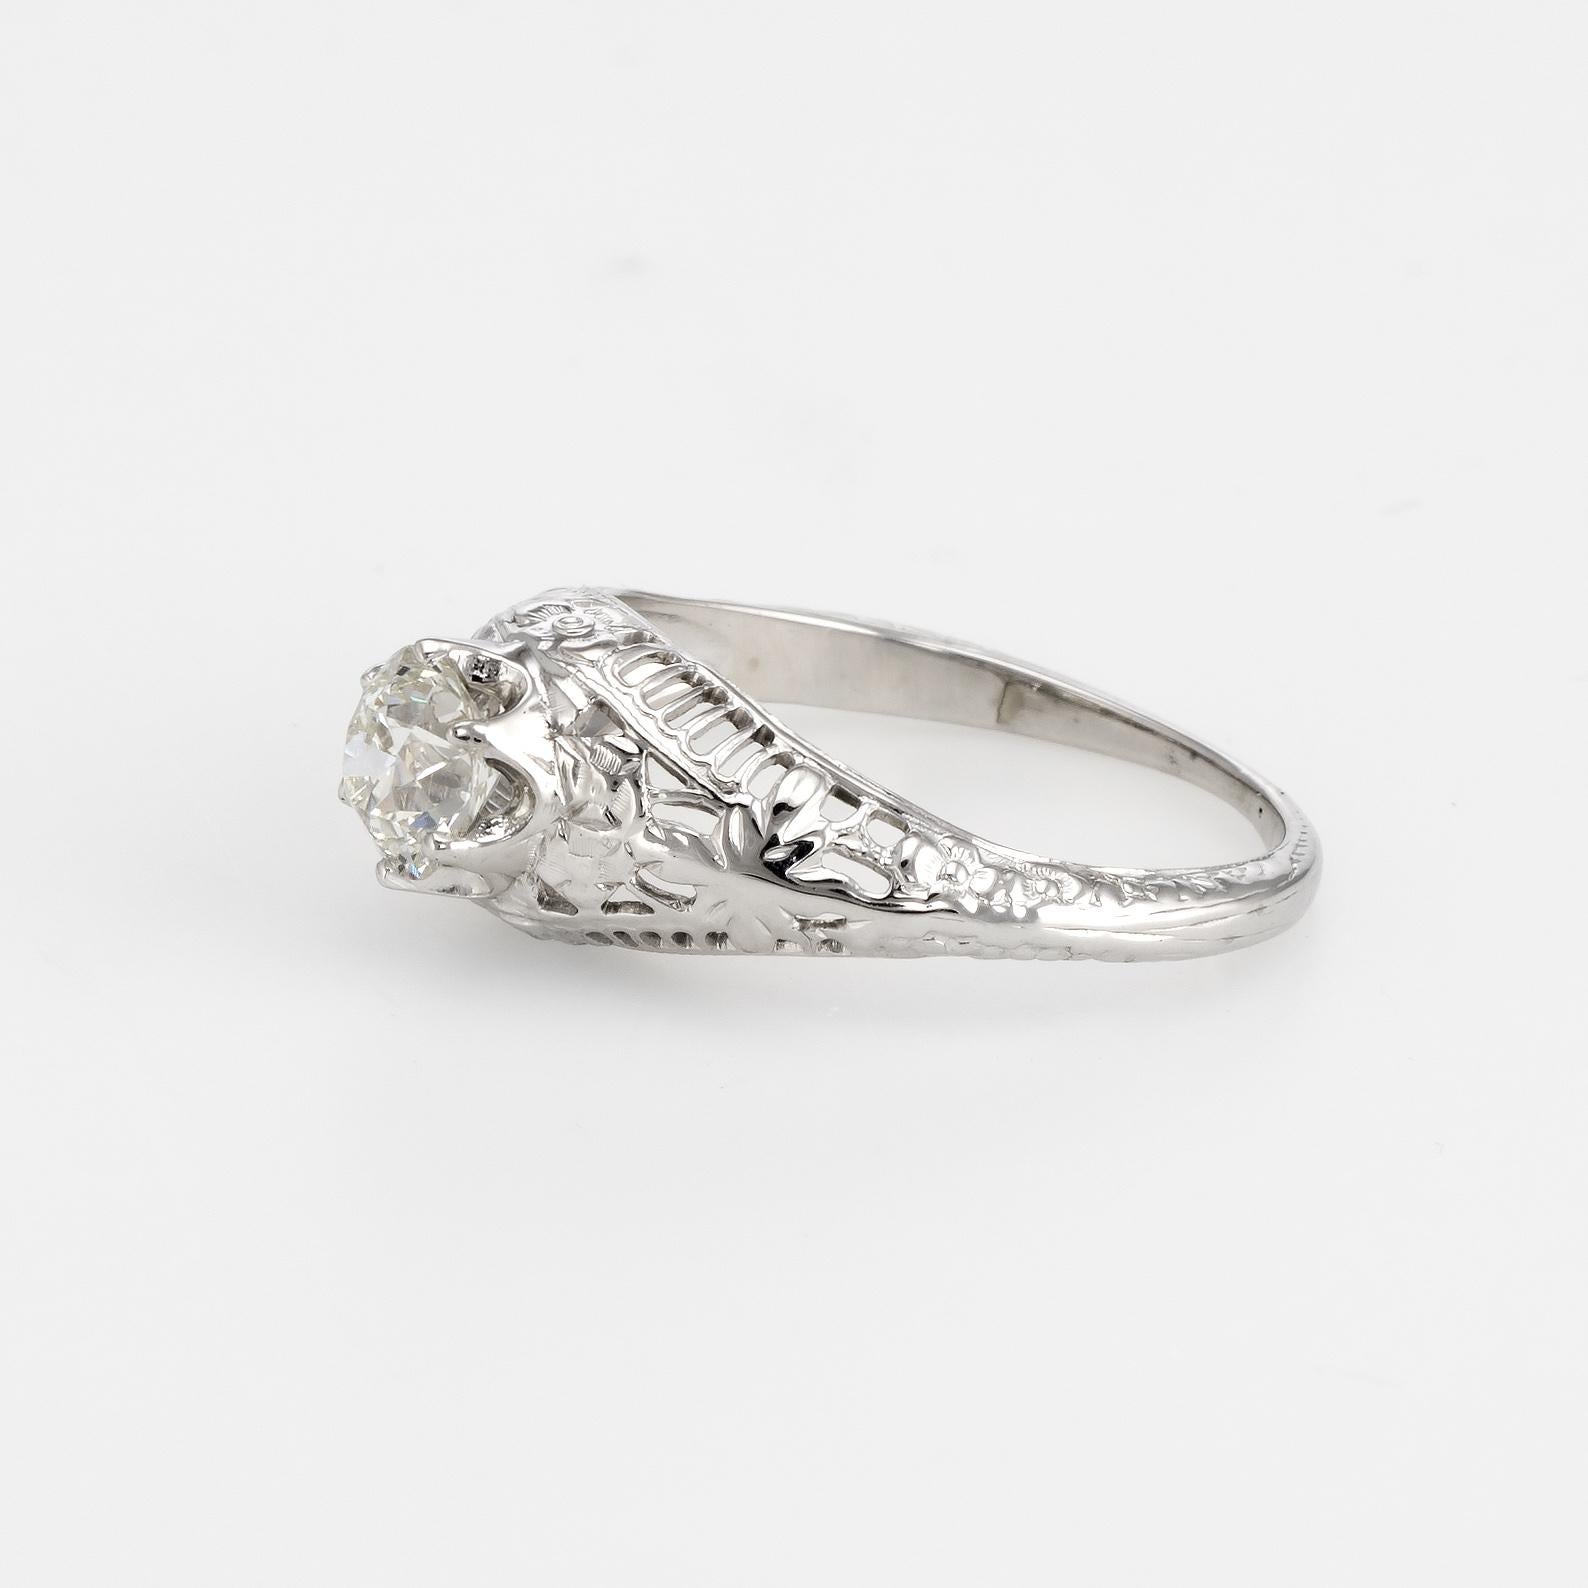 Old Mine Cut Vintage Art Deco Diamond Engagement Ring 14k Gold Filigree Mine Cut Jewelry For Sale